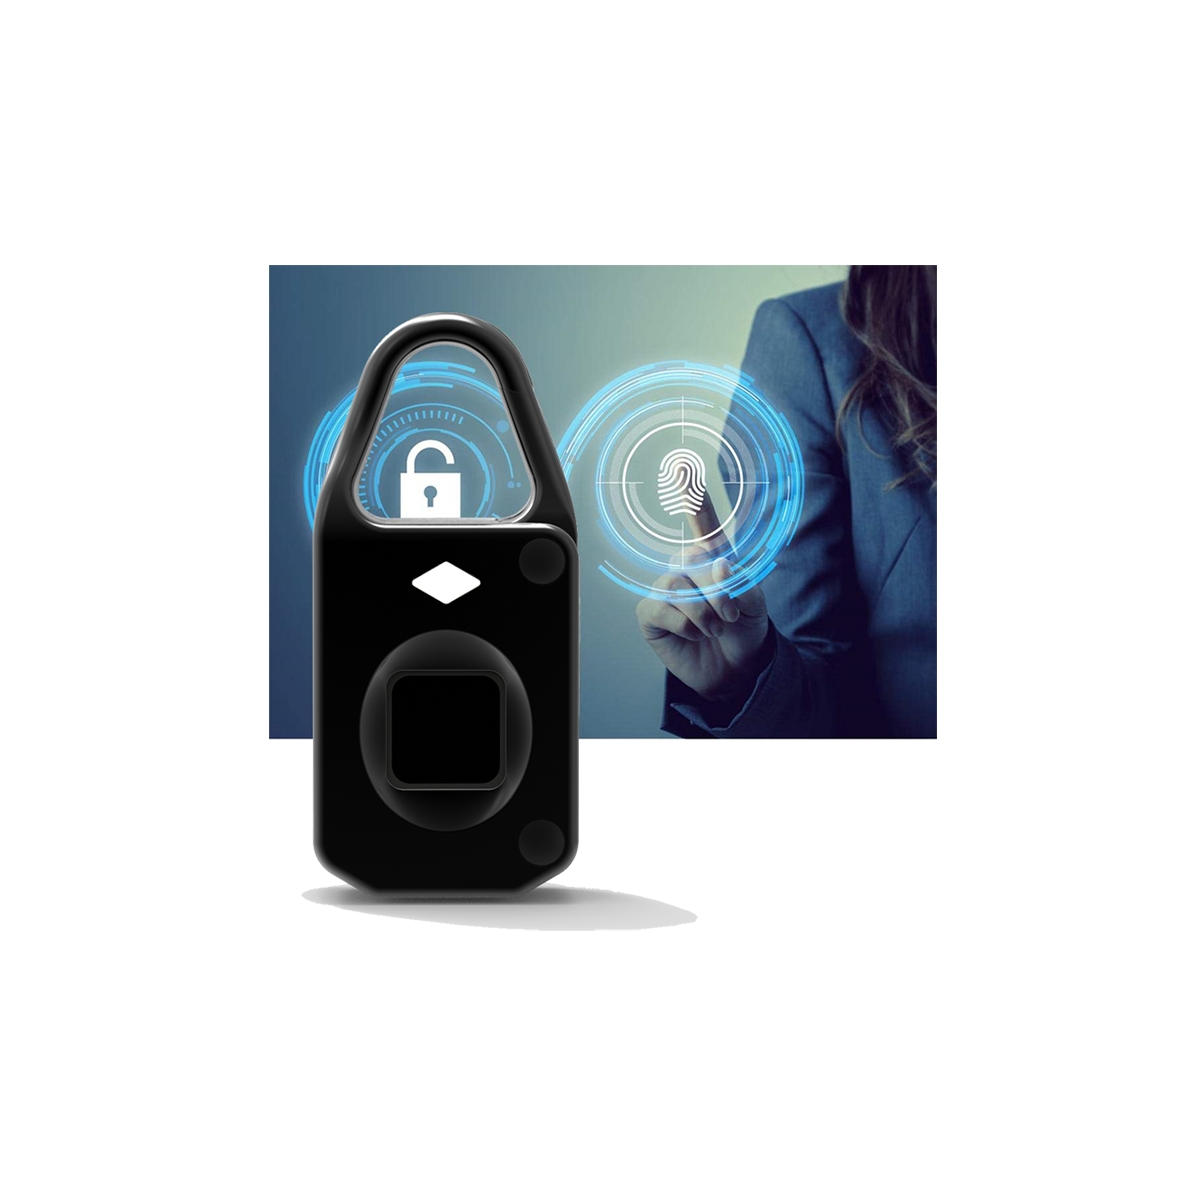 T10 - Fingerprint sensor padlock